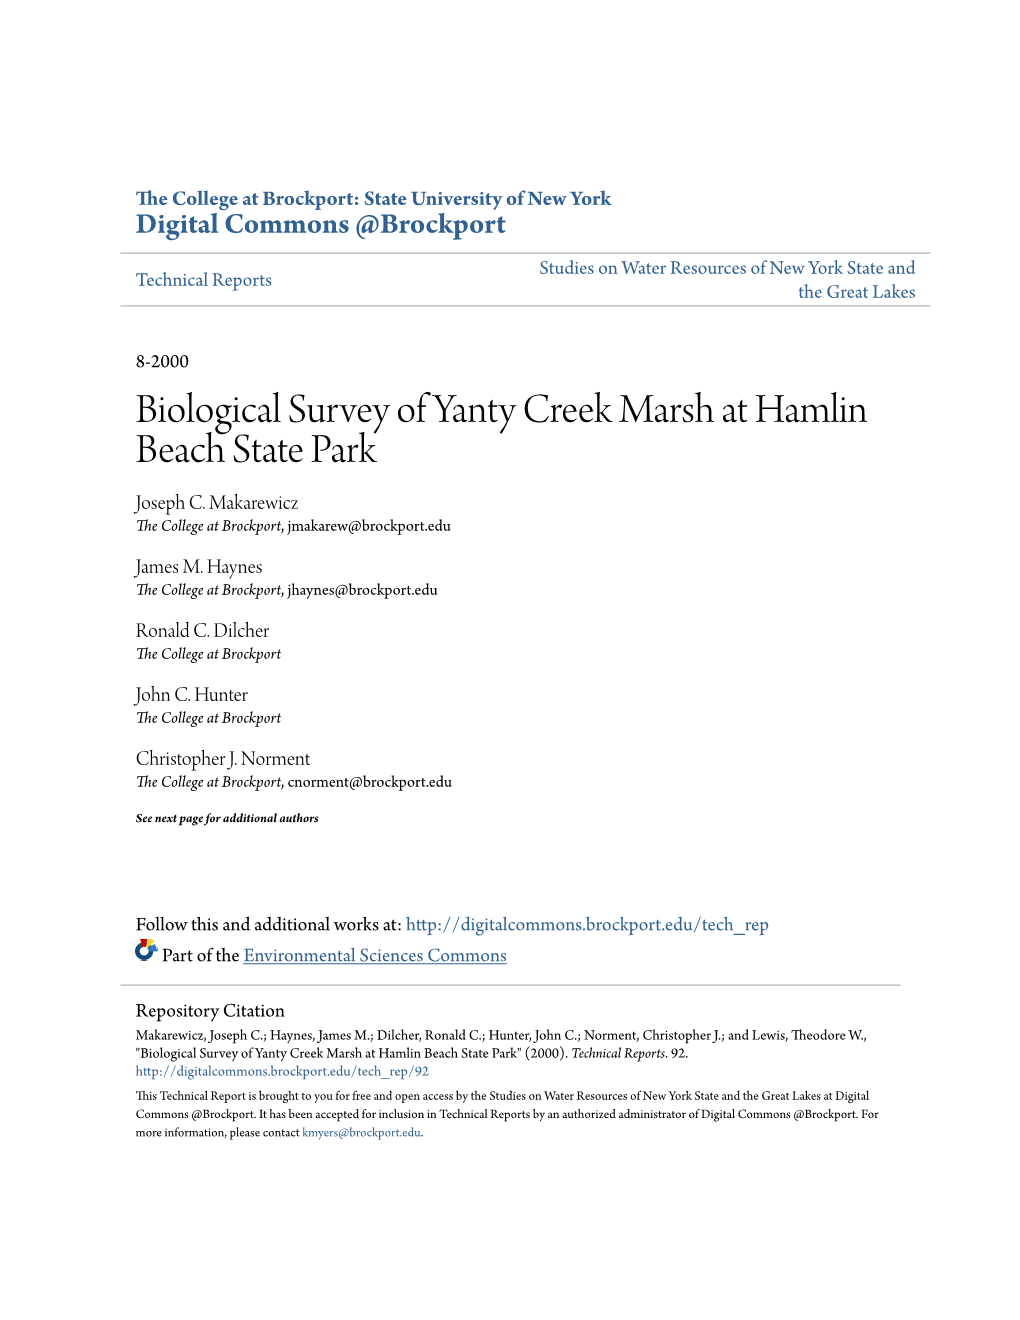 Biological Survey of Yanty Creek Marsh at Hamlin Beach State Park Joseph C